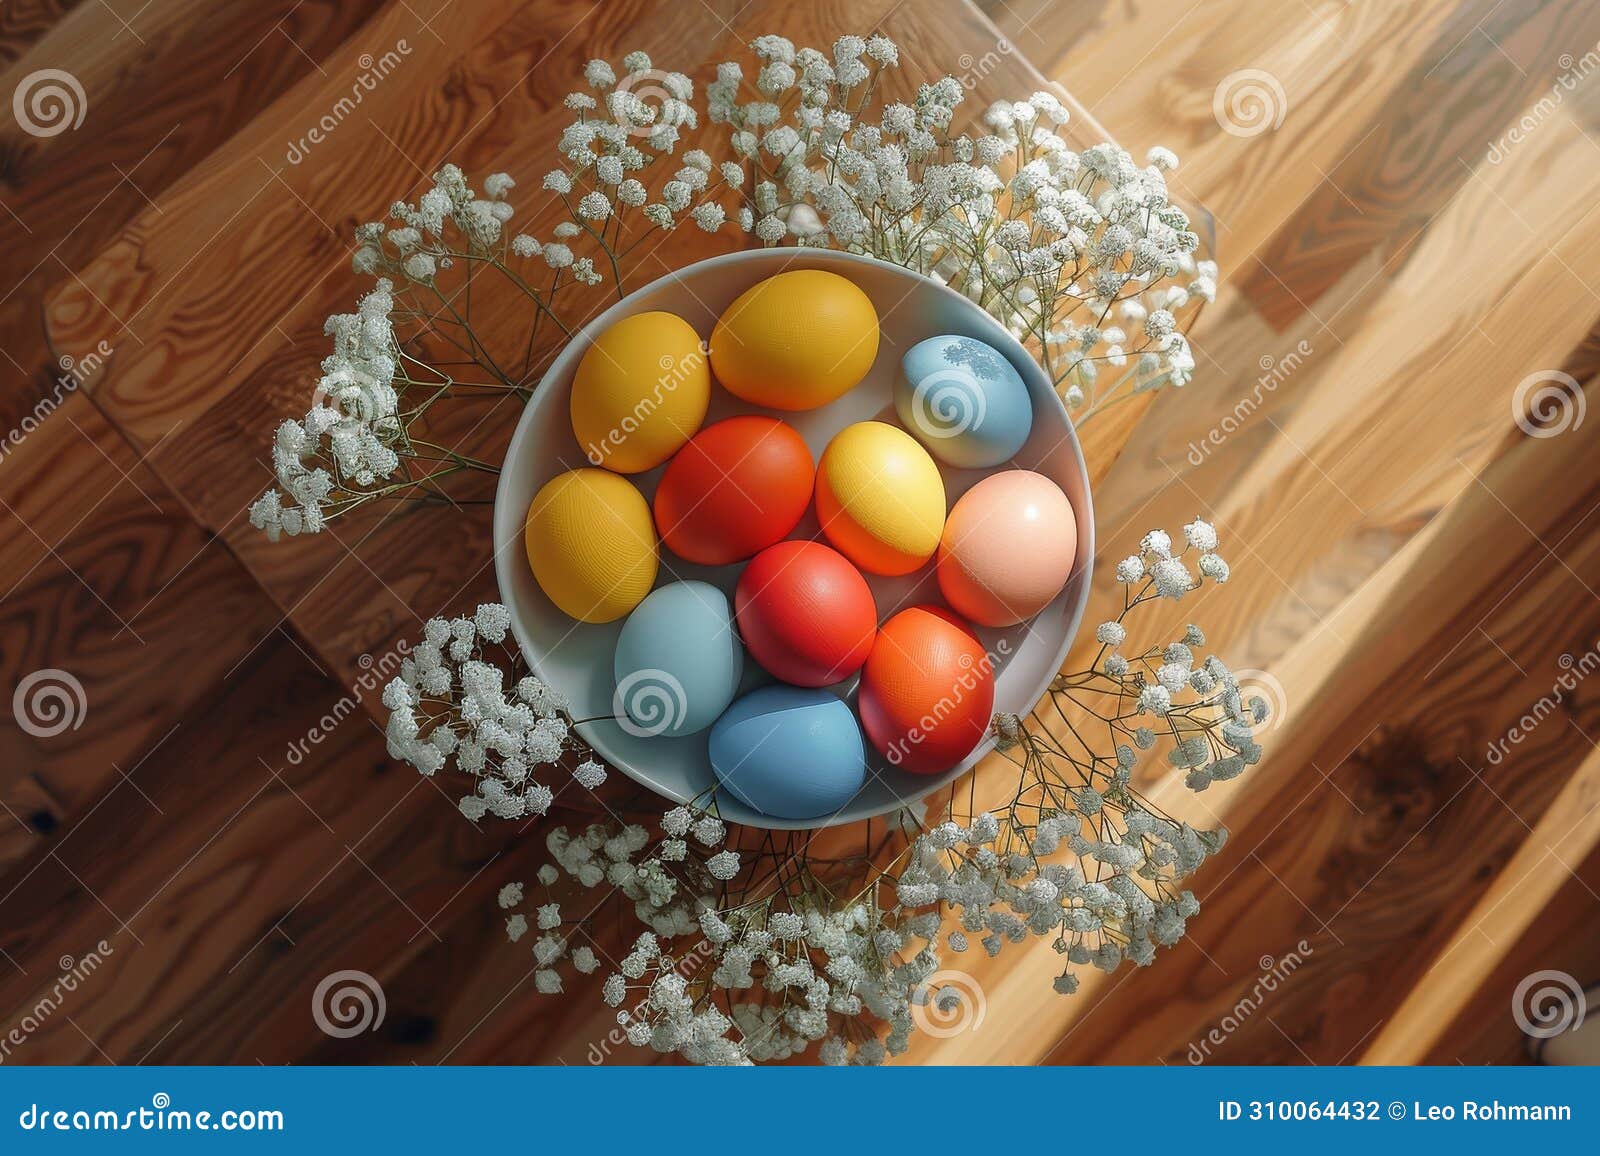 happy easter marigolds eggs easter basket extras basket. white hoppy wet bunny trickster. egg decorating background wallpaper